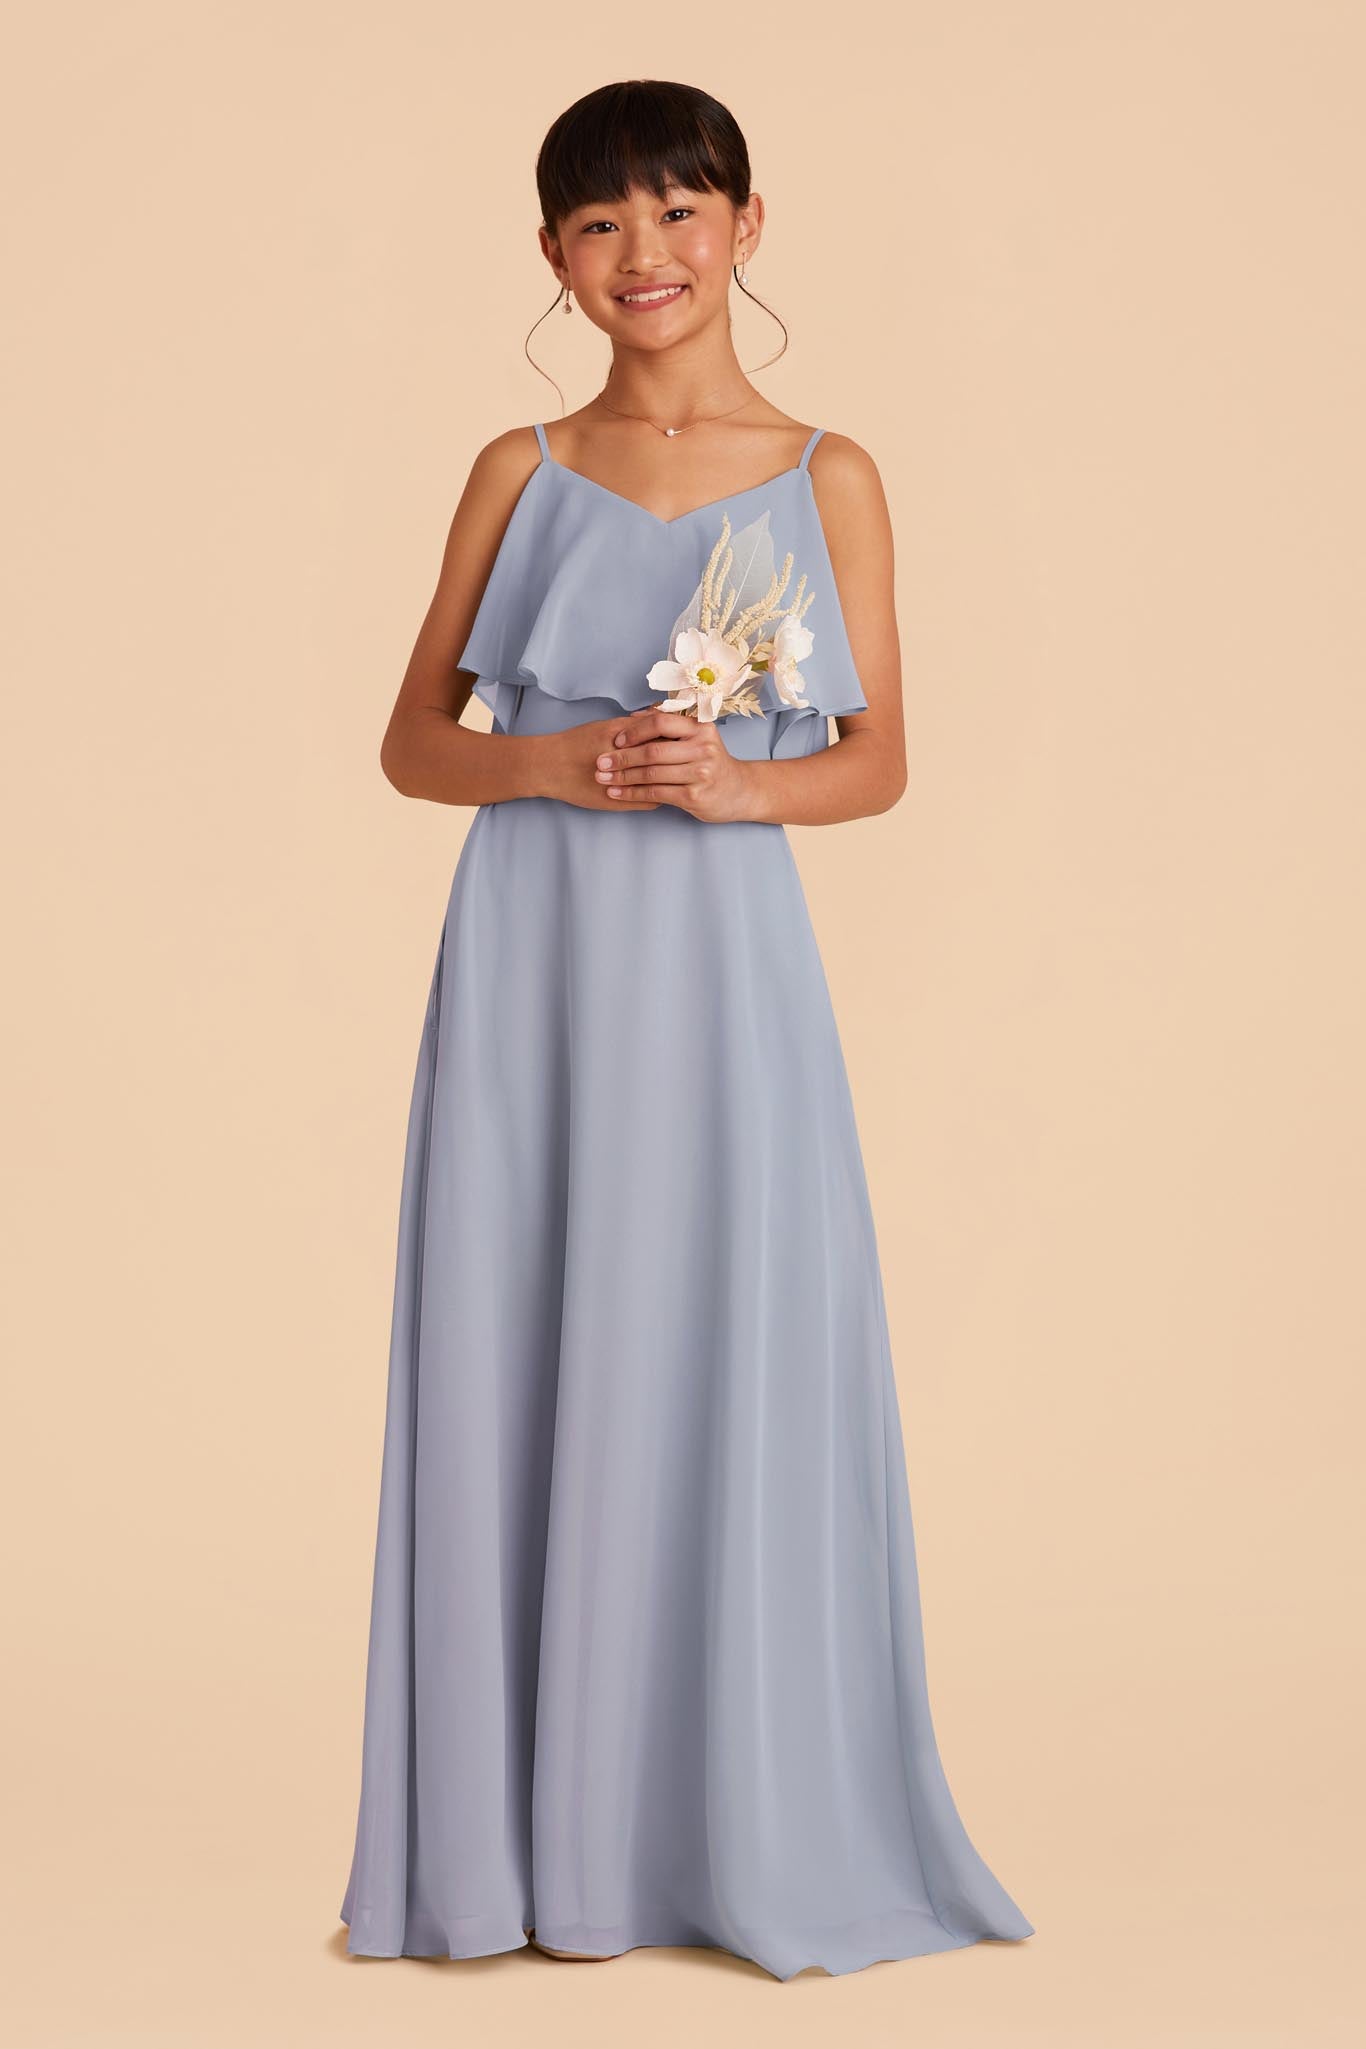 Janie Convertible Junior Bridesmaid Dress in Dusty Blue